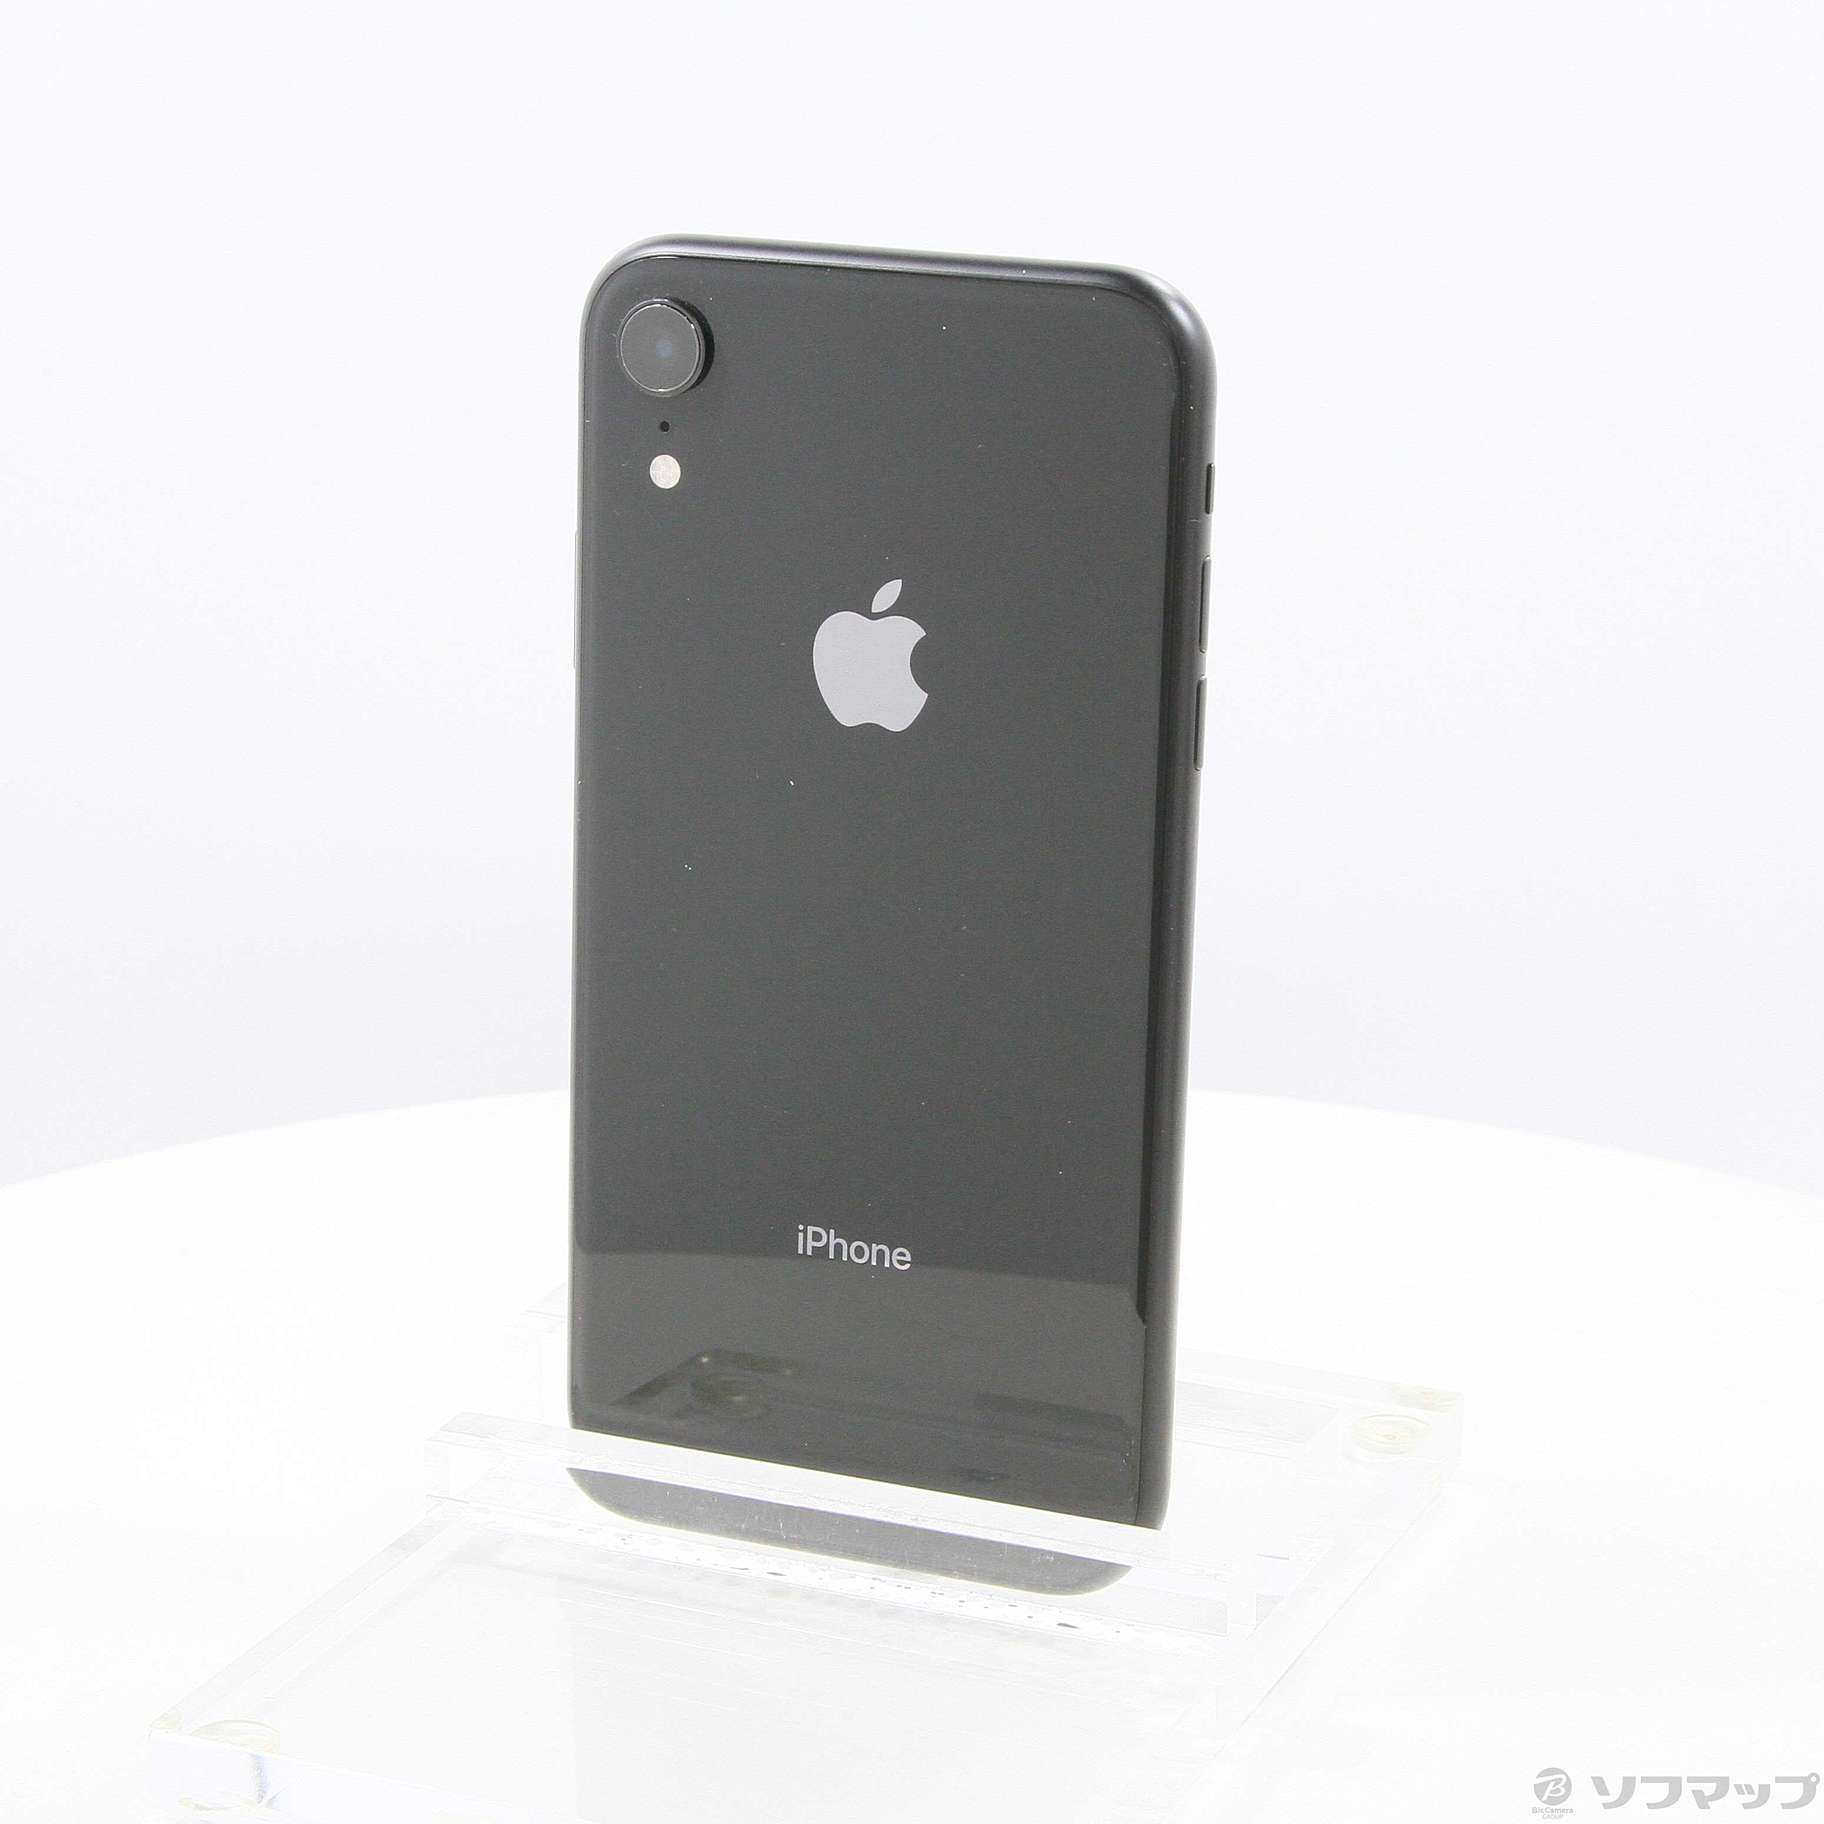 iPhone XR ブラック64GB (ケース付)